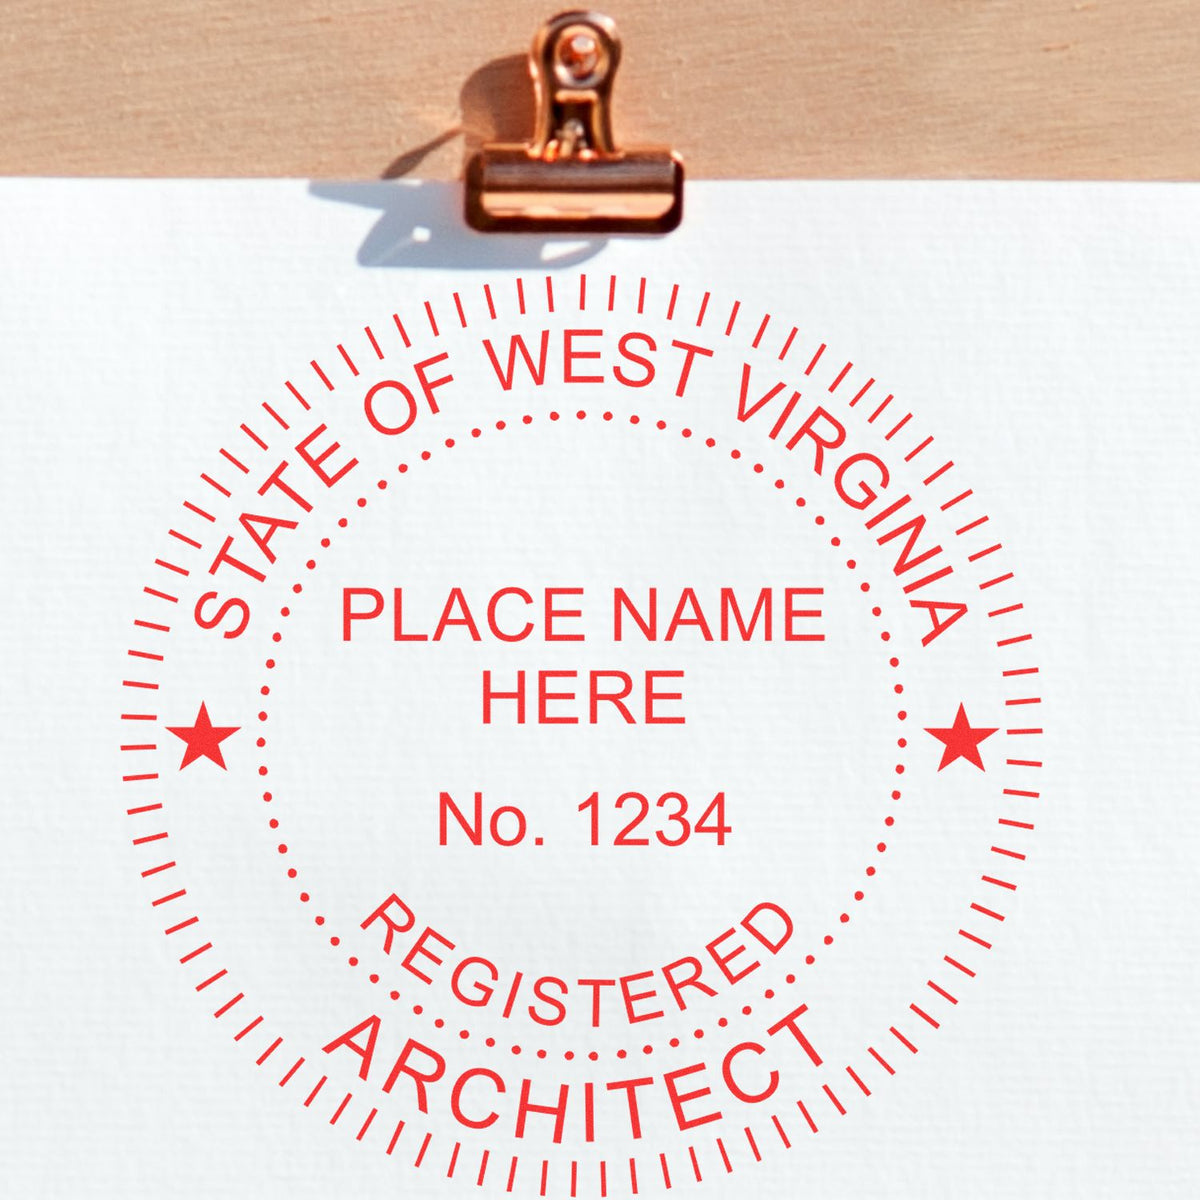 West Virginia Architect Seal Stamp Lifestyle Photo